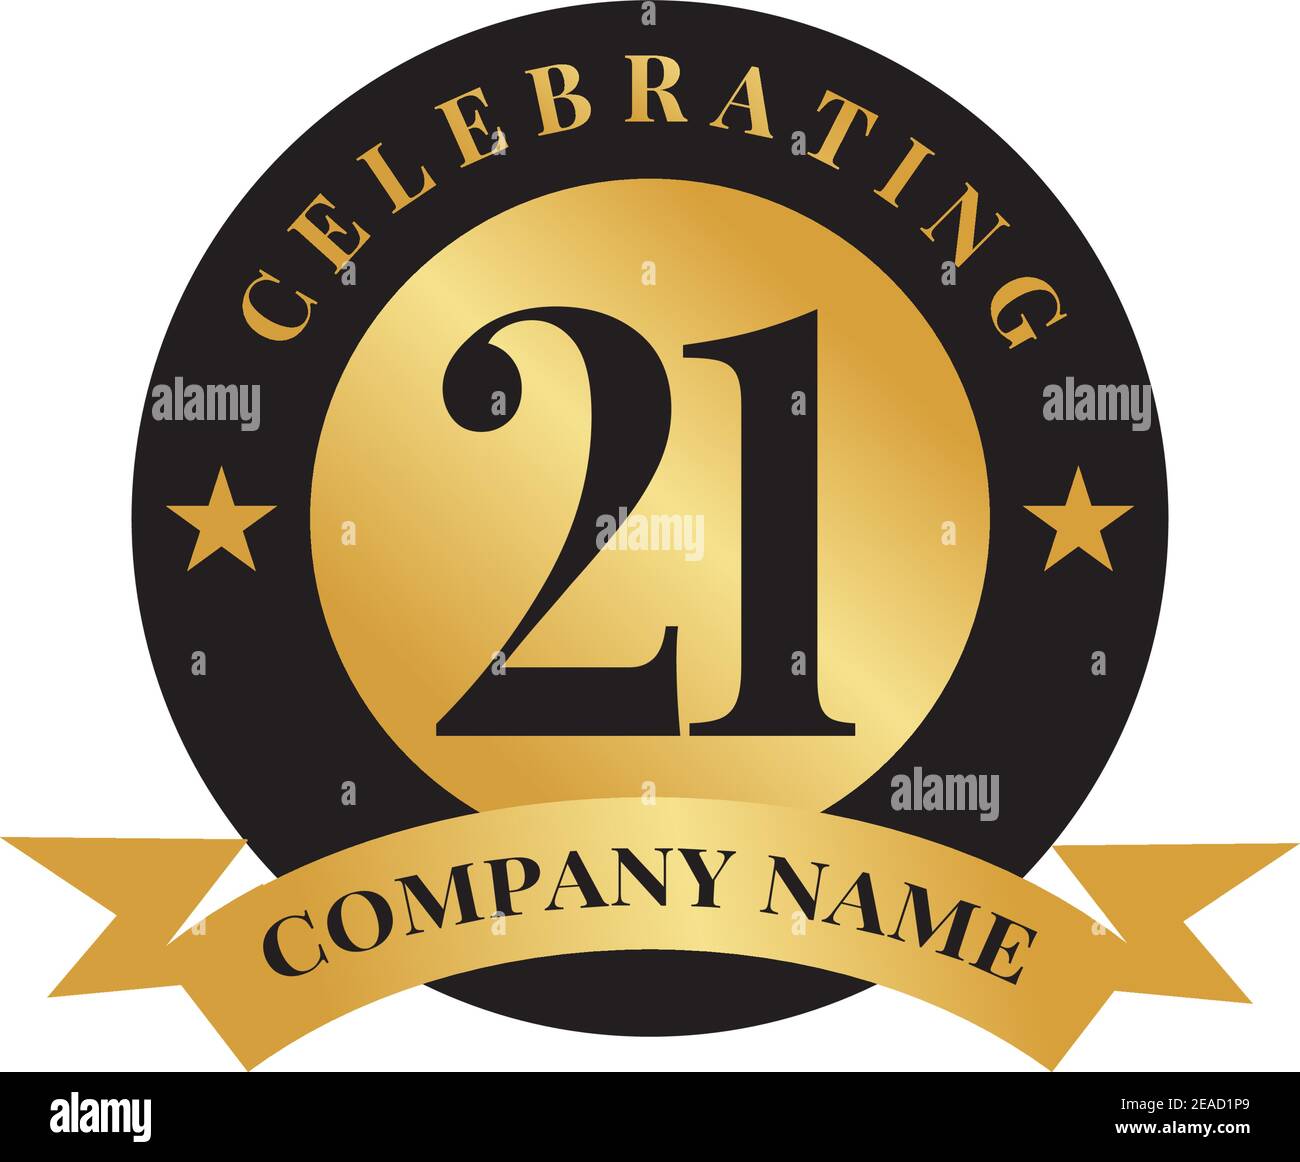 21st year anniversary logo design vector illustration template Stock Vector